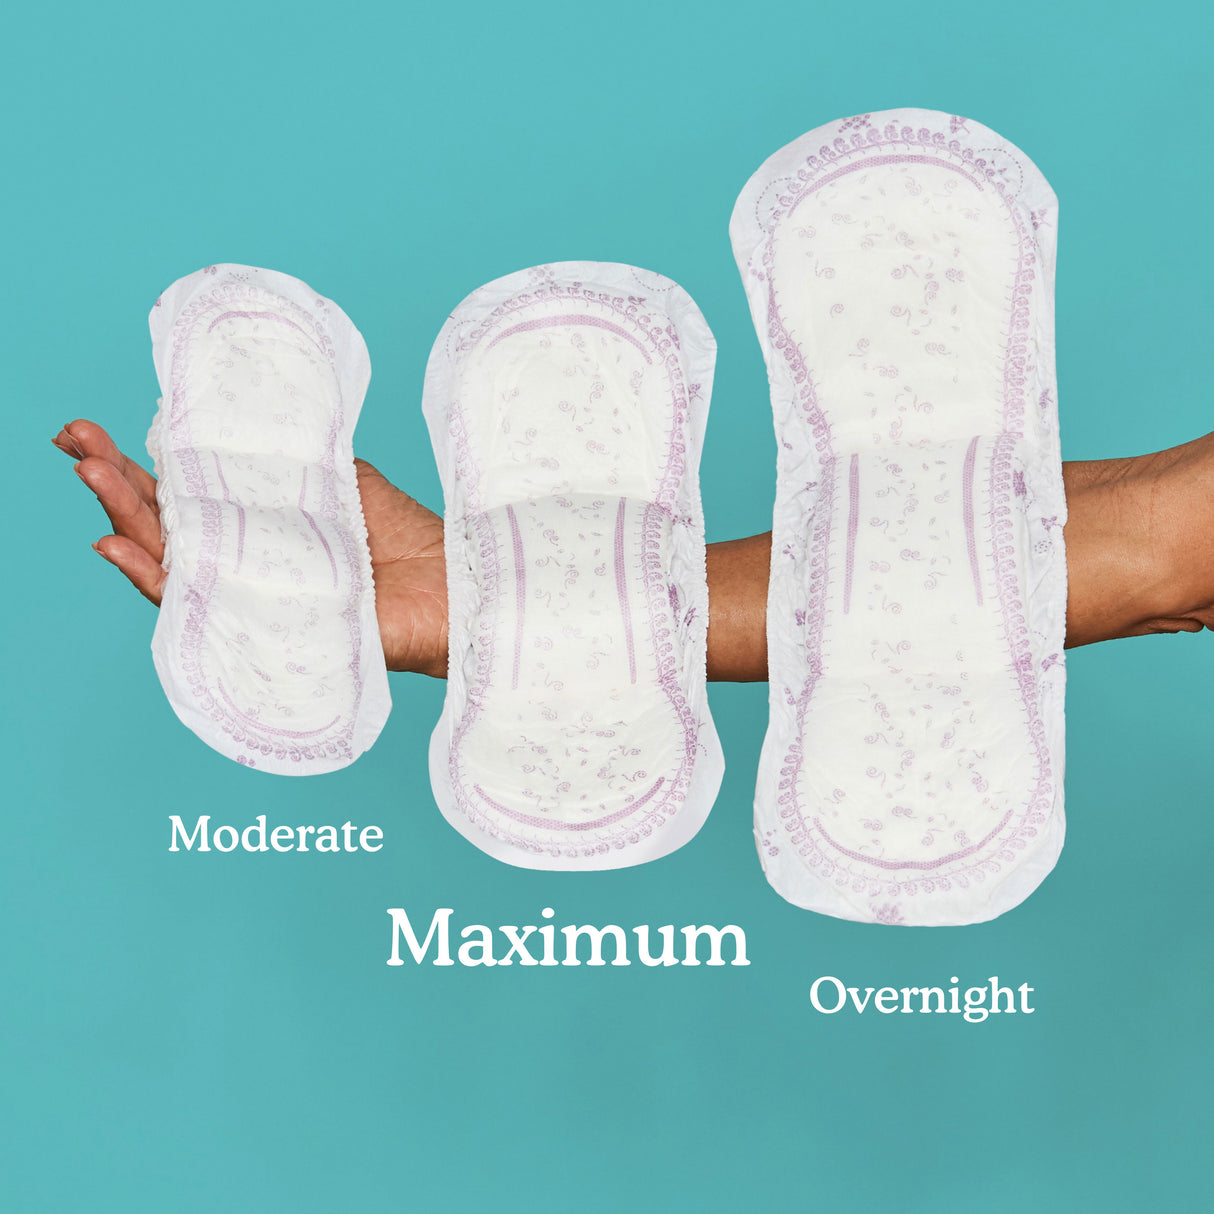 Arm/ hand holding three pads. Moderate, Maximum, and Overnight. 